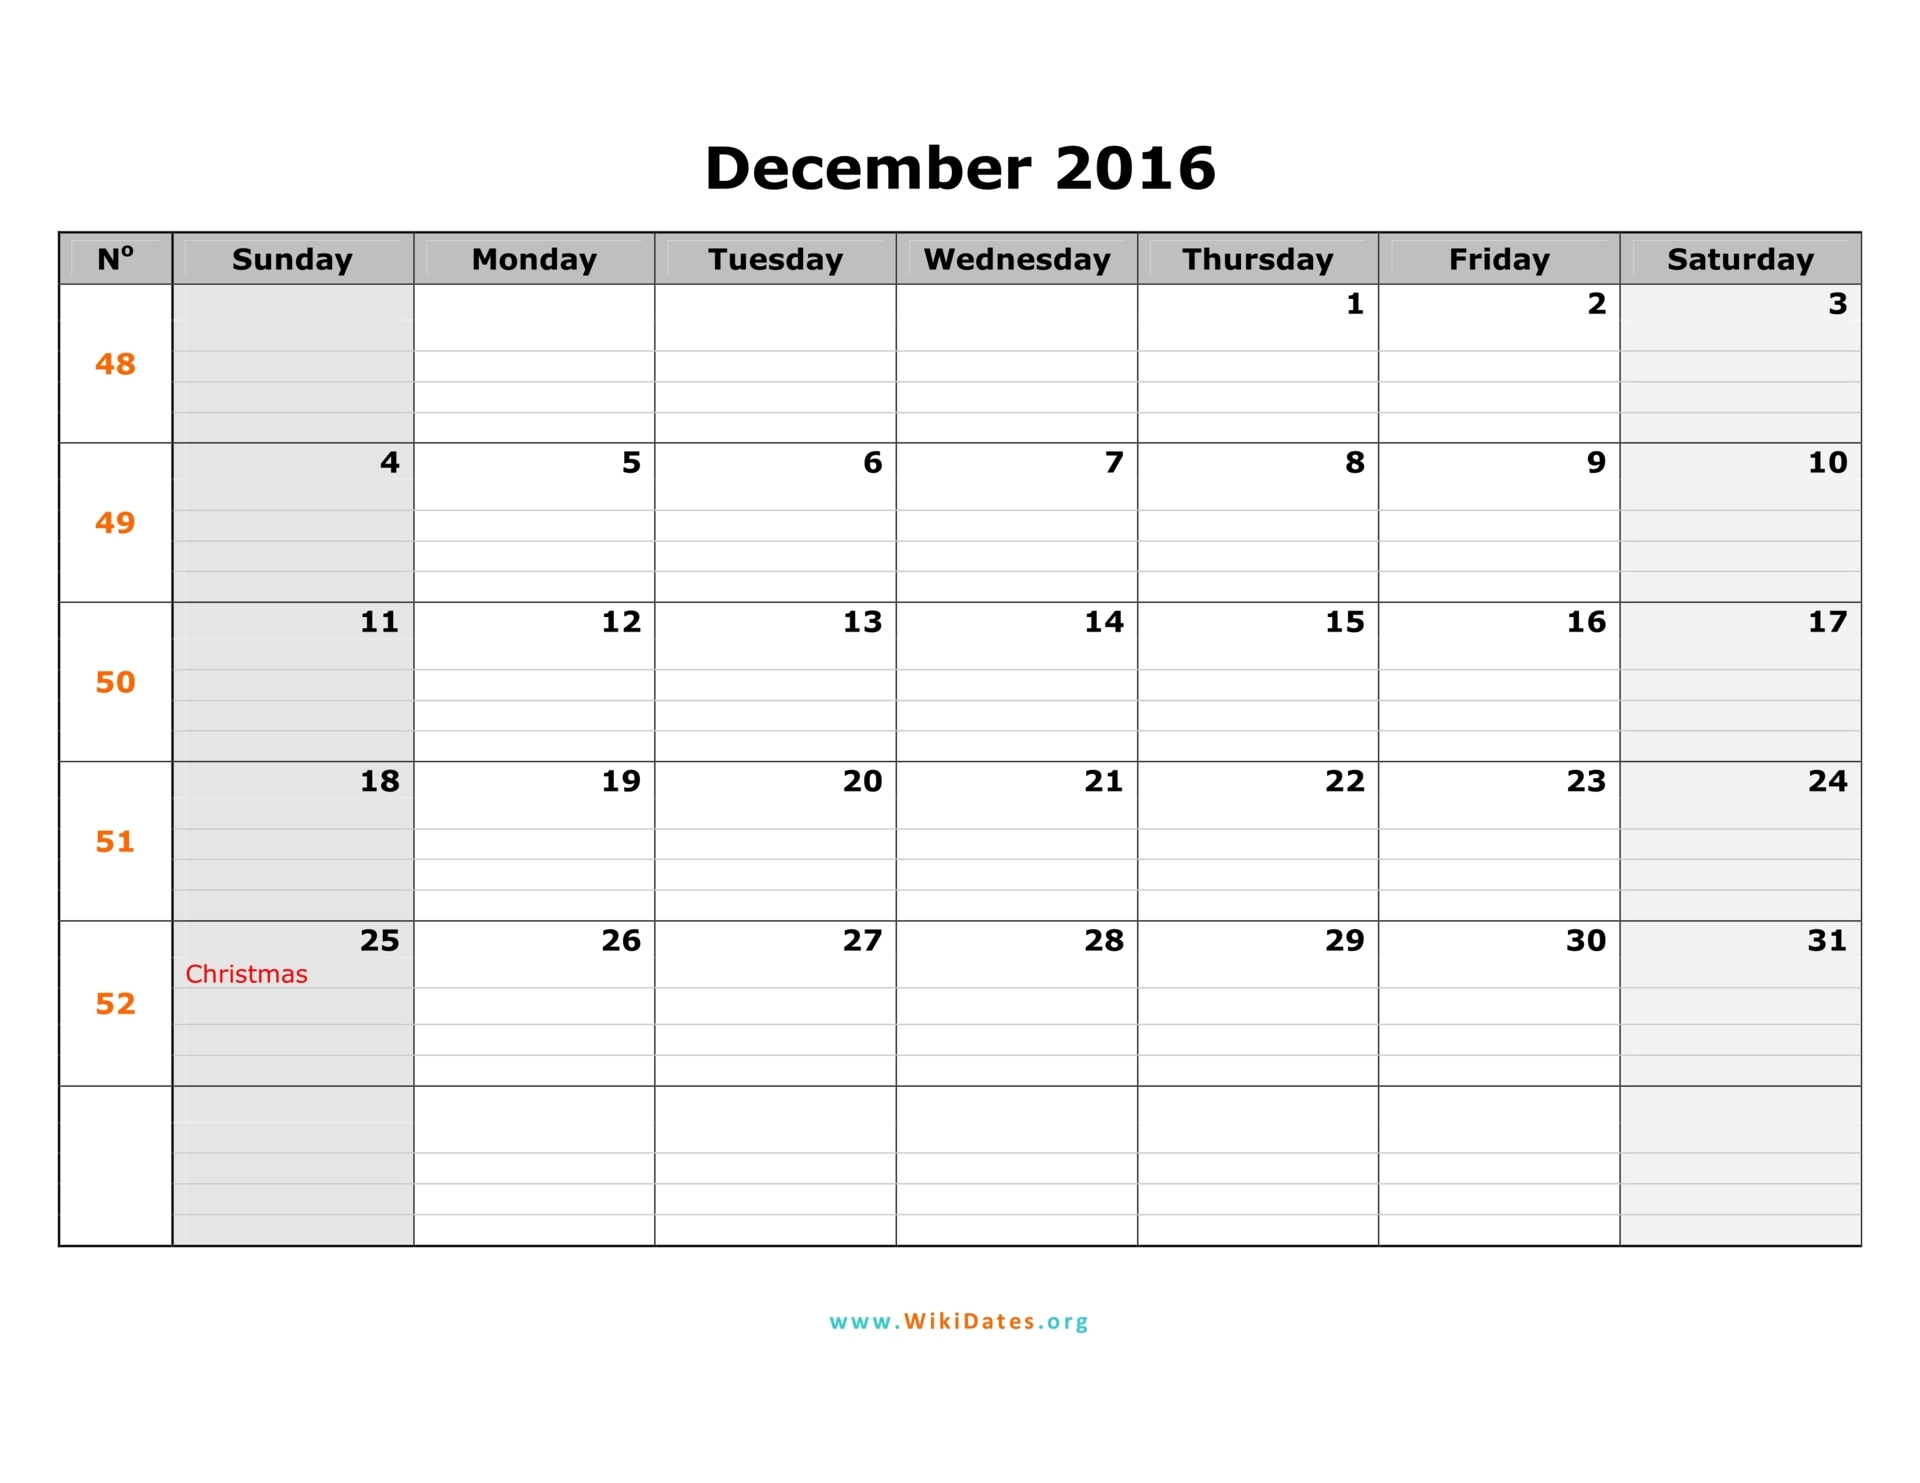 December 2016 Calendar Template Word from www.wikidates.org